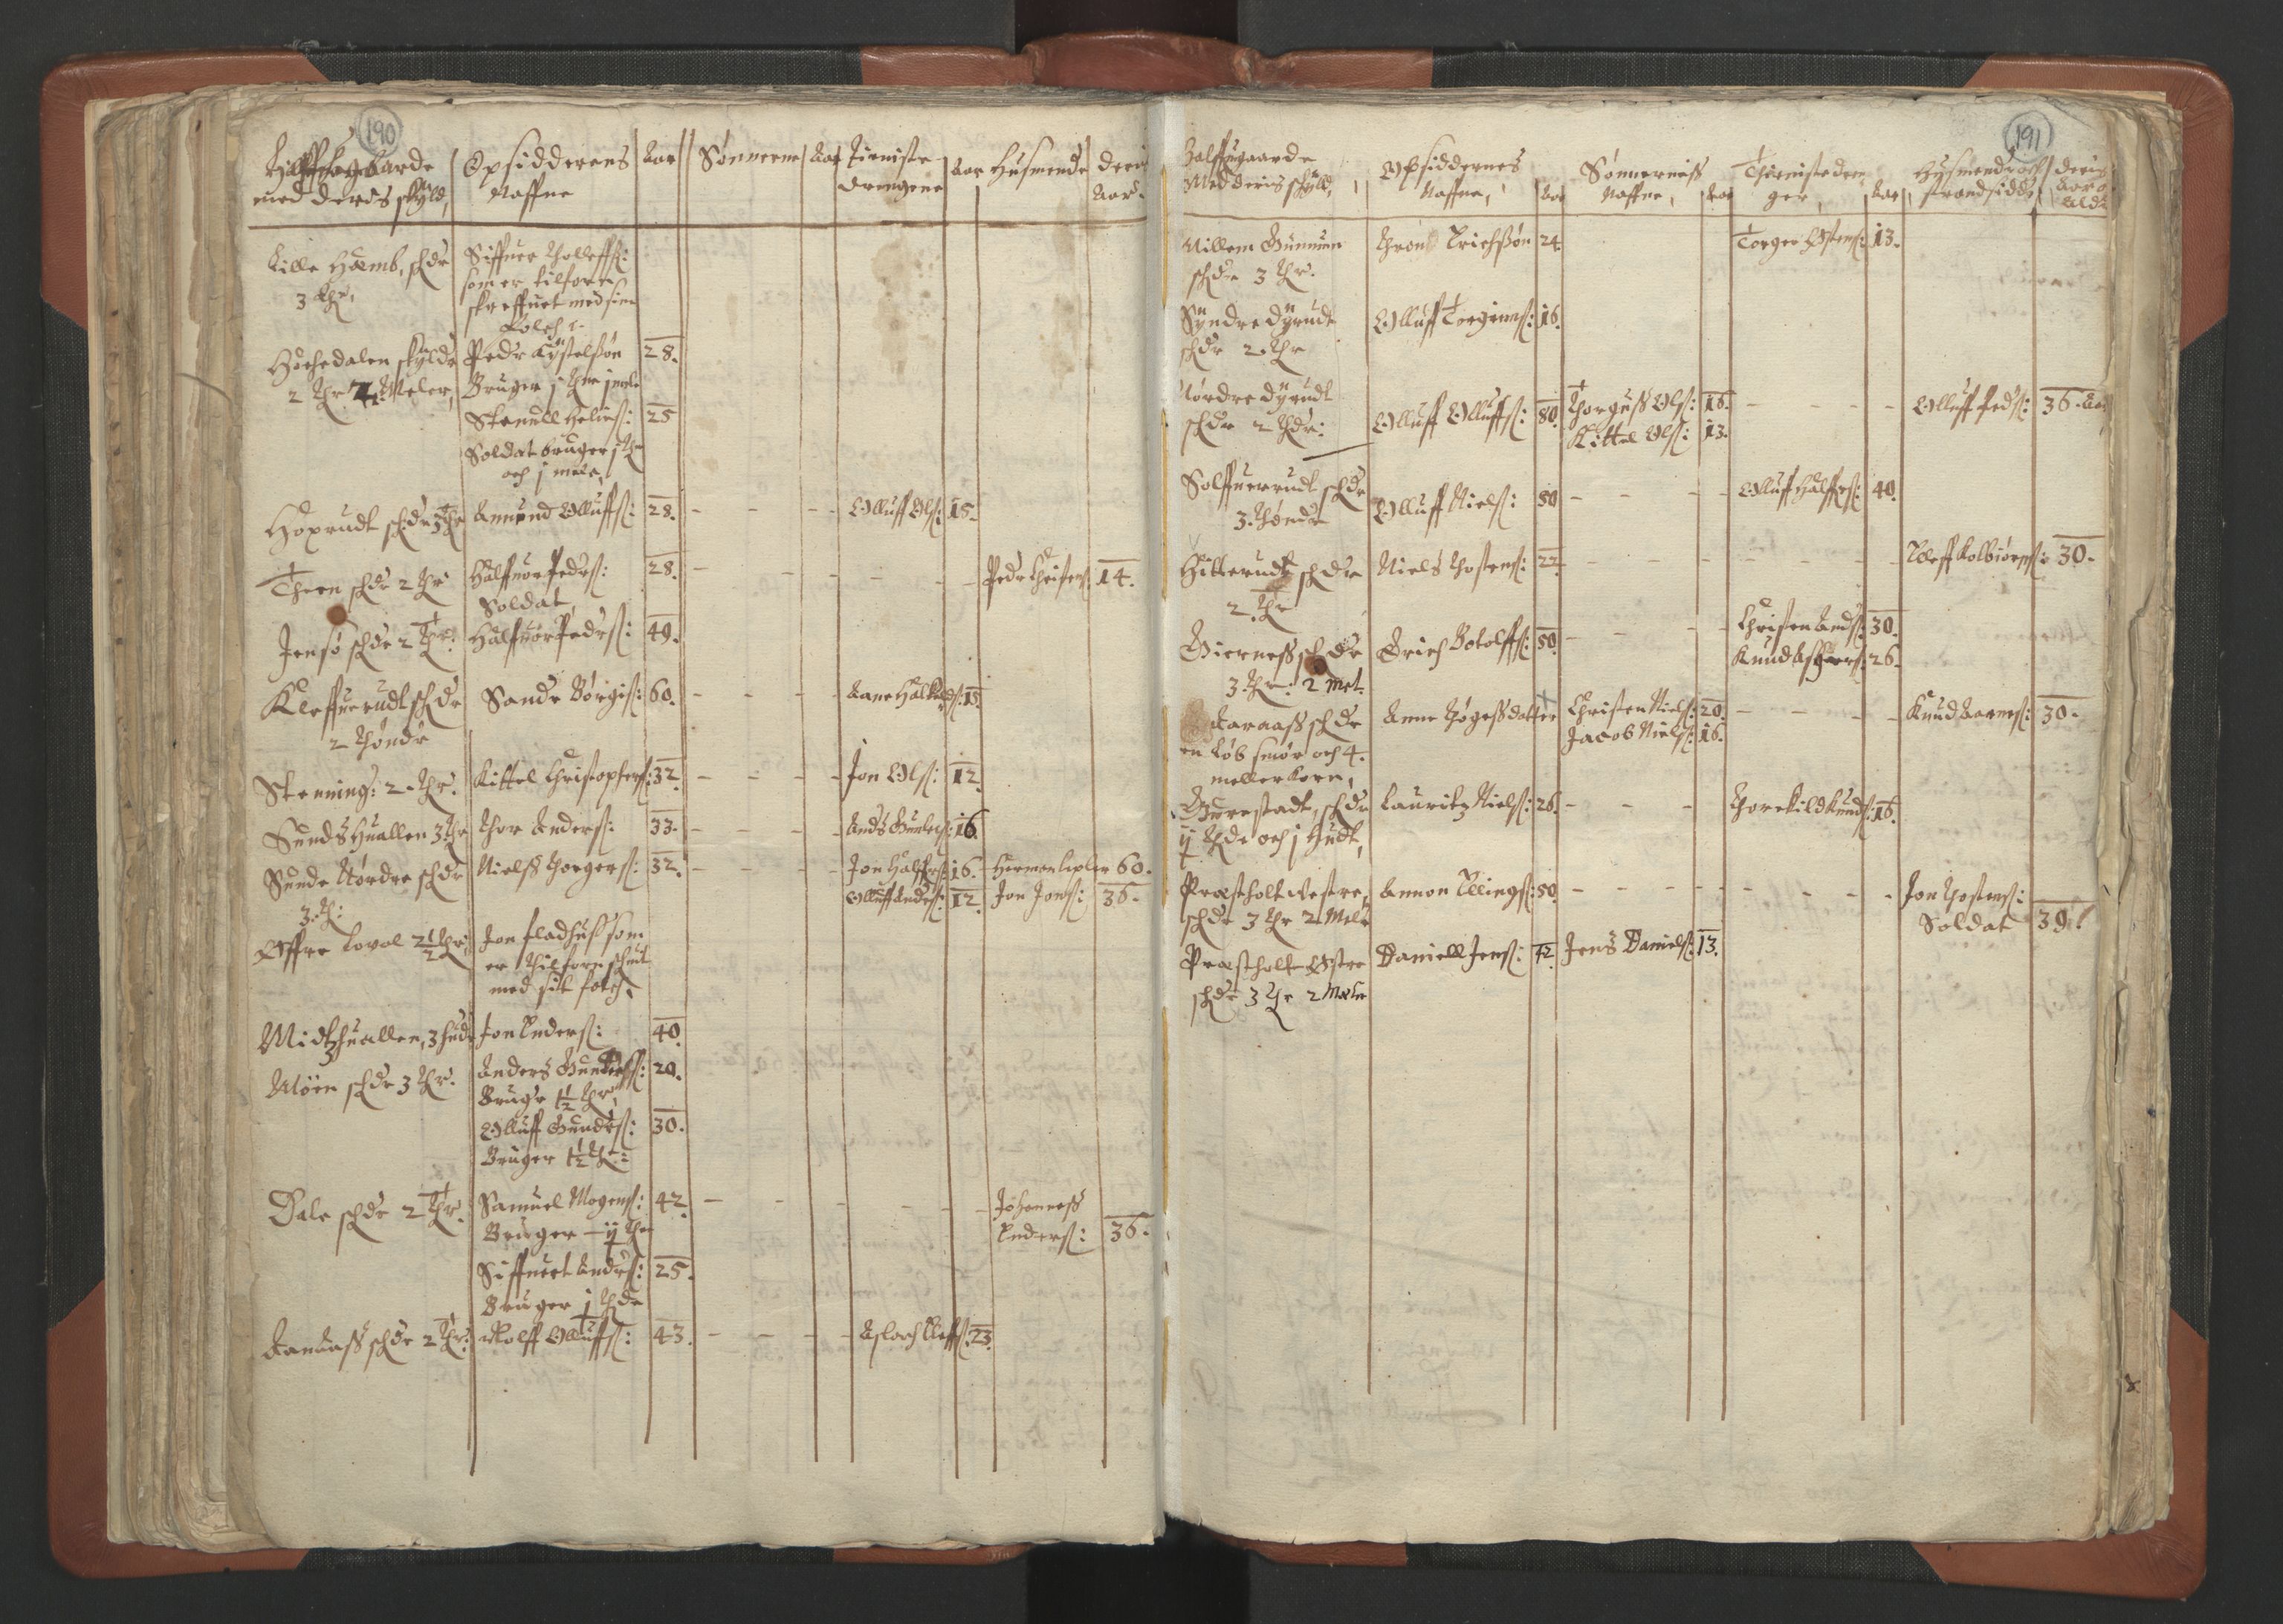 RA, Vicar's Census 1664-1666, no. 12: Øvre Telemark deanery, Nedre Telemark deanery and Bamble deanery, 1664-1666, p. 190-191